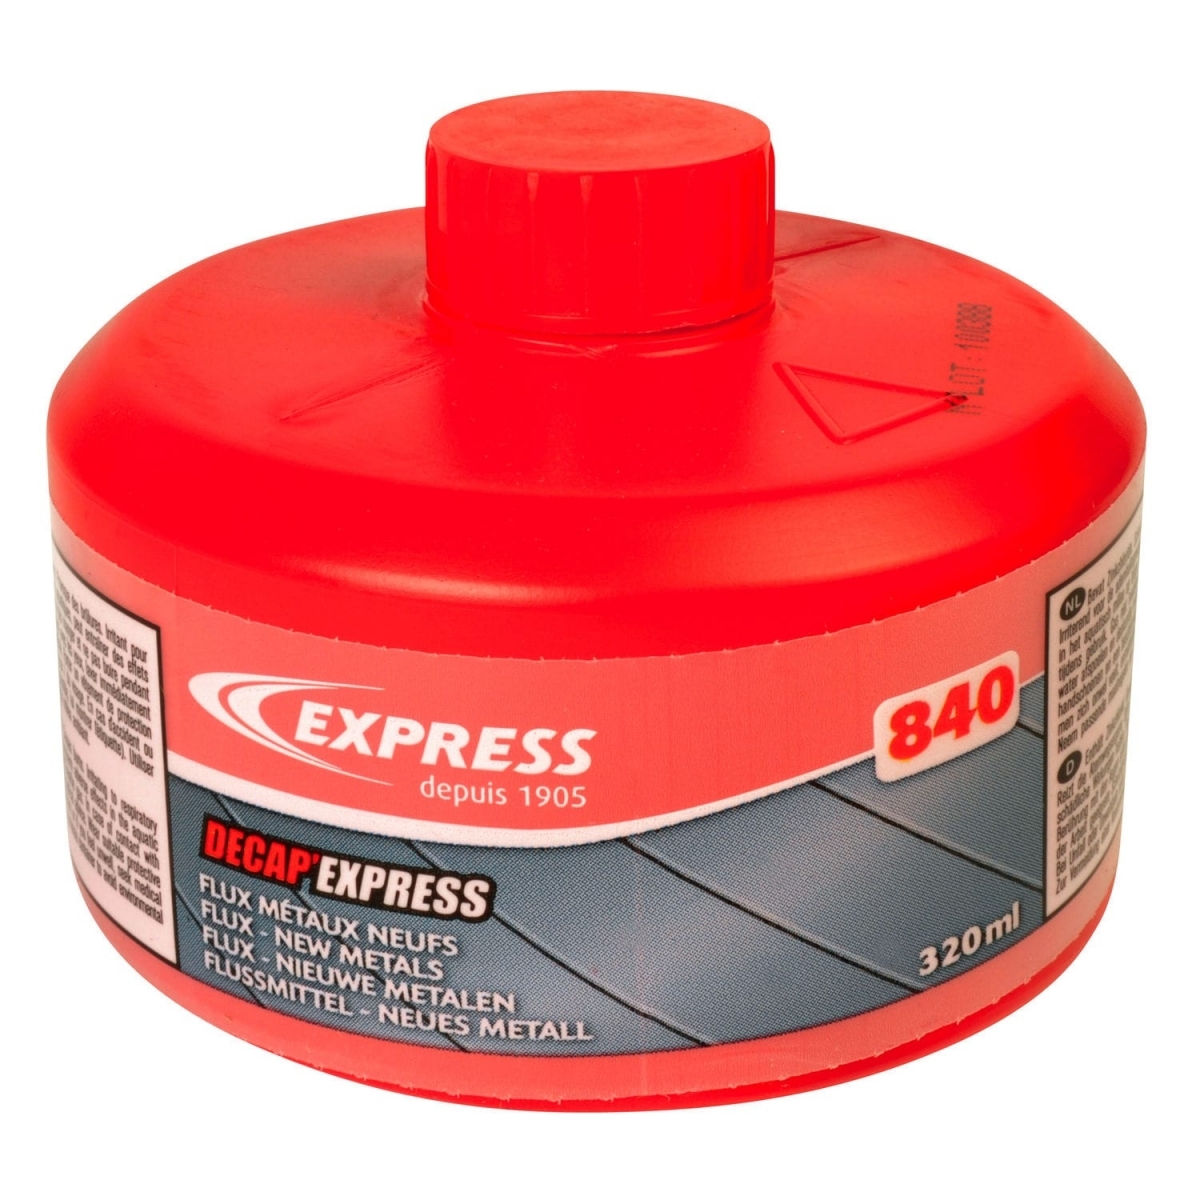 Express Letovací gel DECAP 320ml